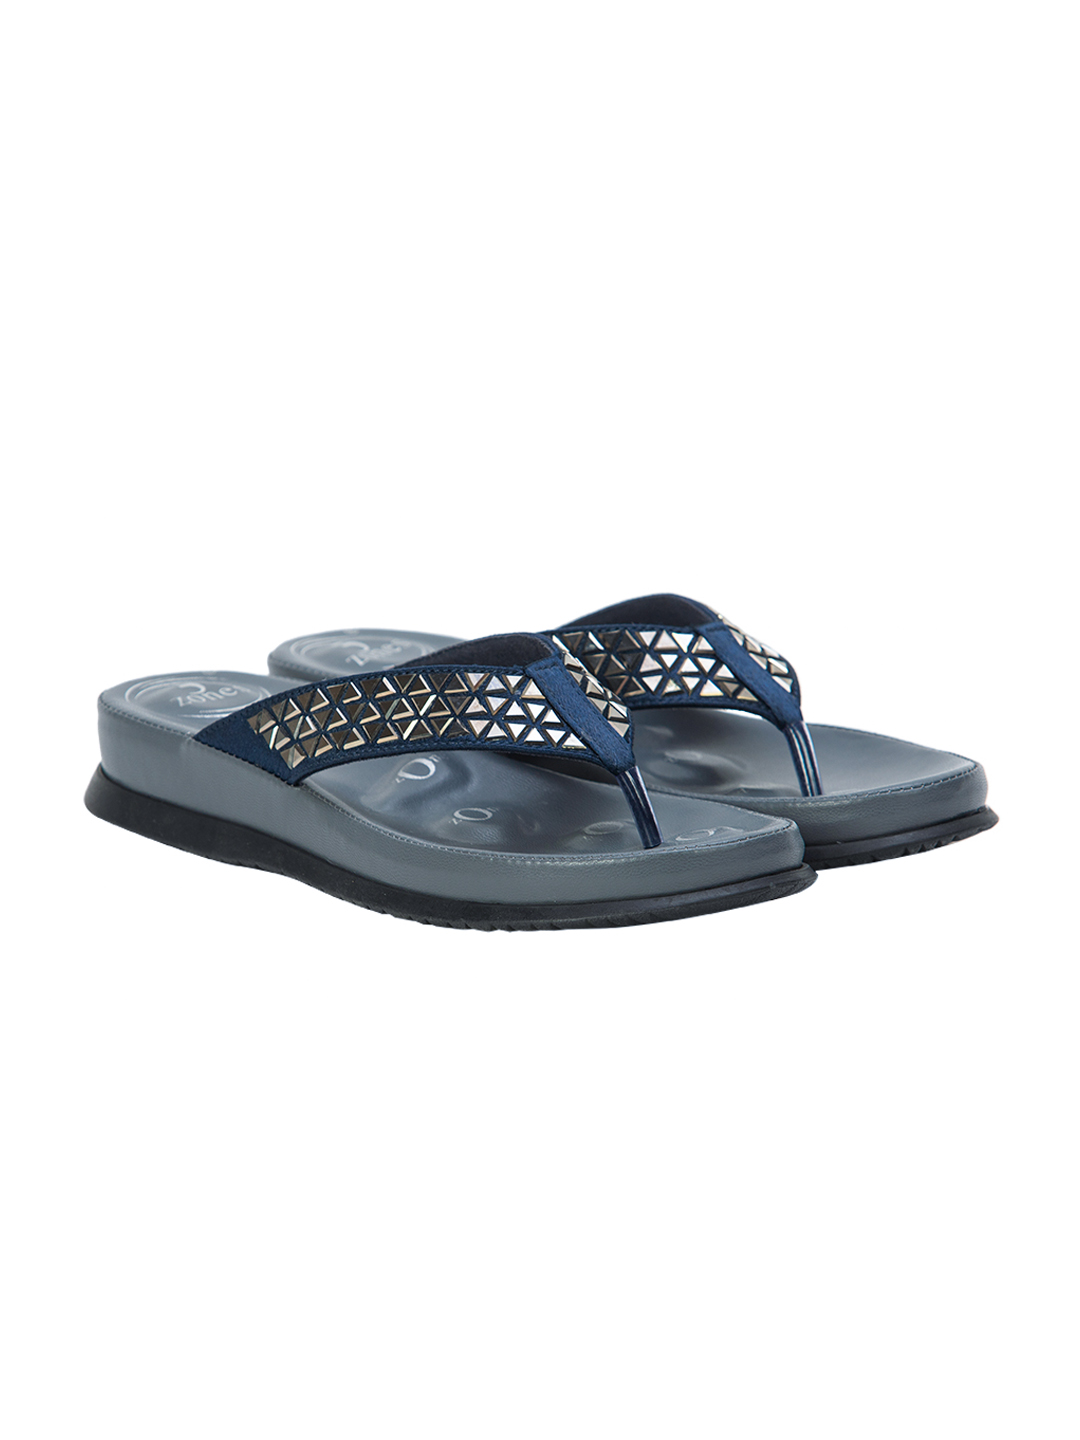 Buy Von Wellx Germany Comfort Beam Blue Slippers Online in Kanpur